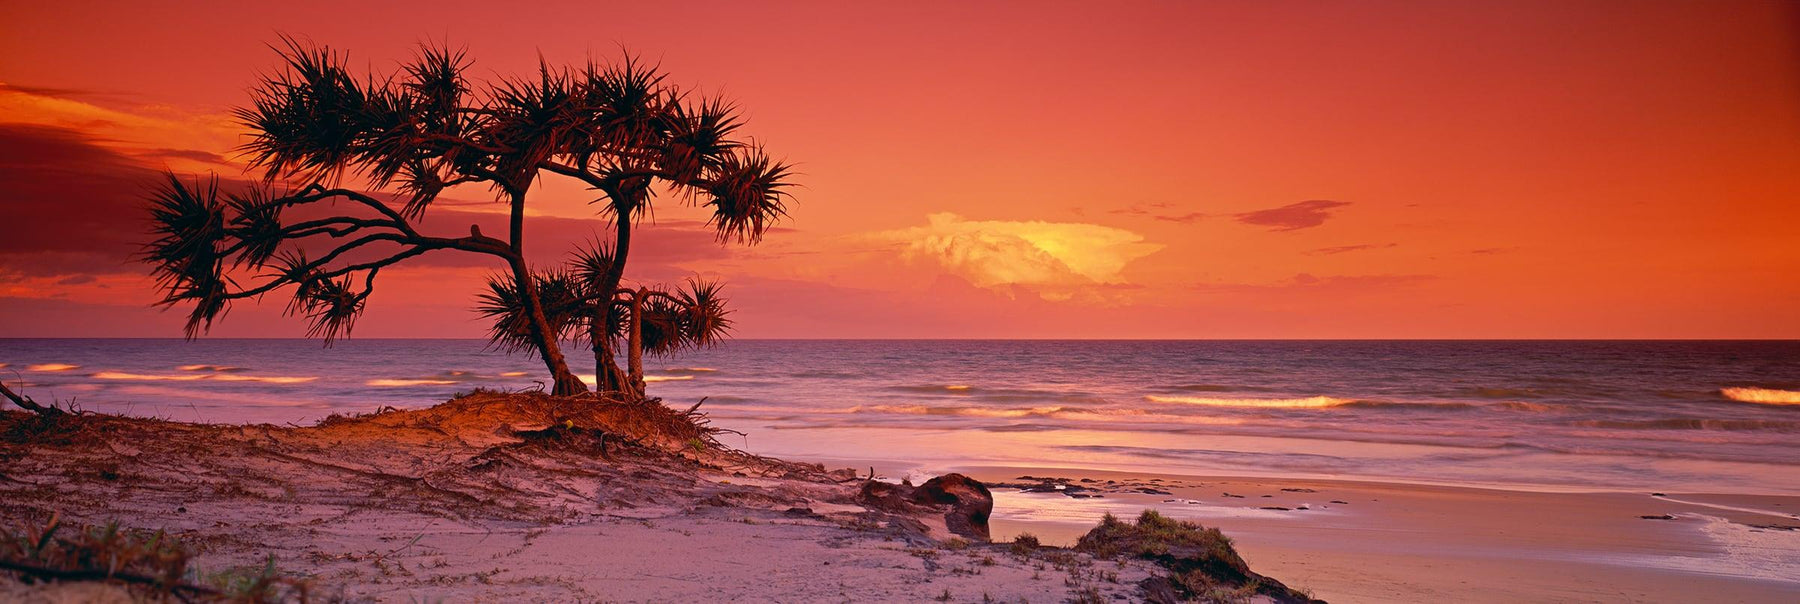 Pandanus tree in the foreground of the sand dune beach of Fraser Island Australia at sunrise